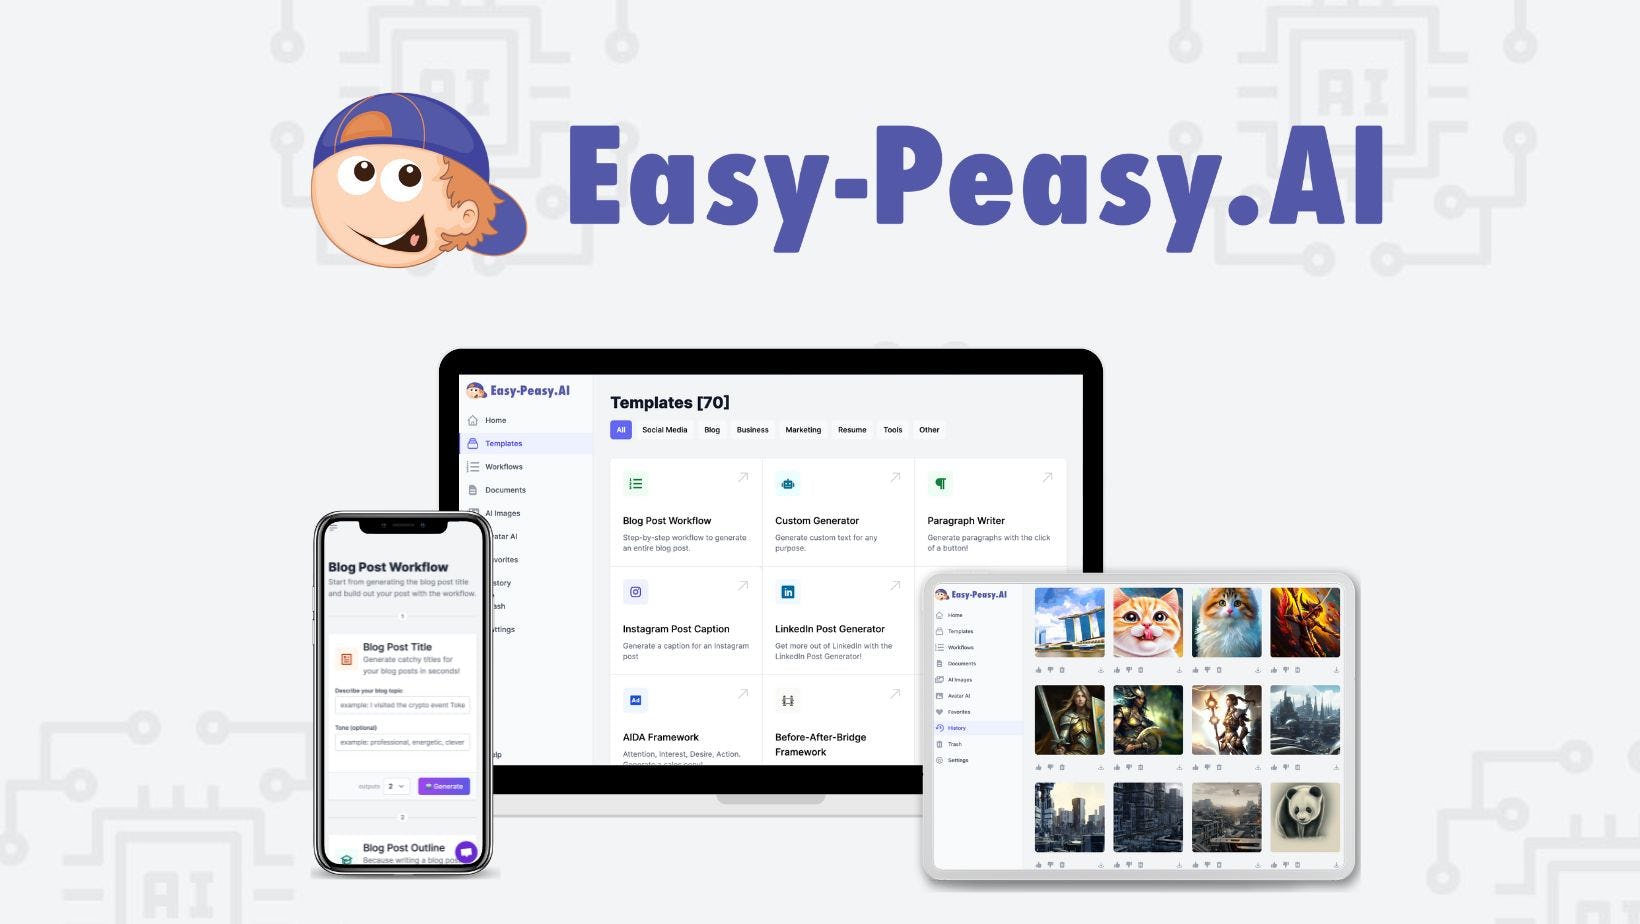 Easy-Peasy.AI Software - 2023 Reviews, Pricing & Demo